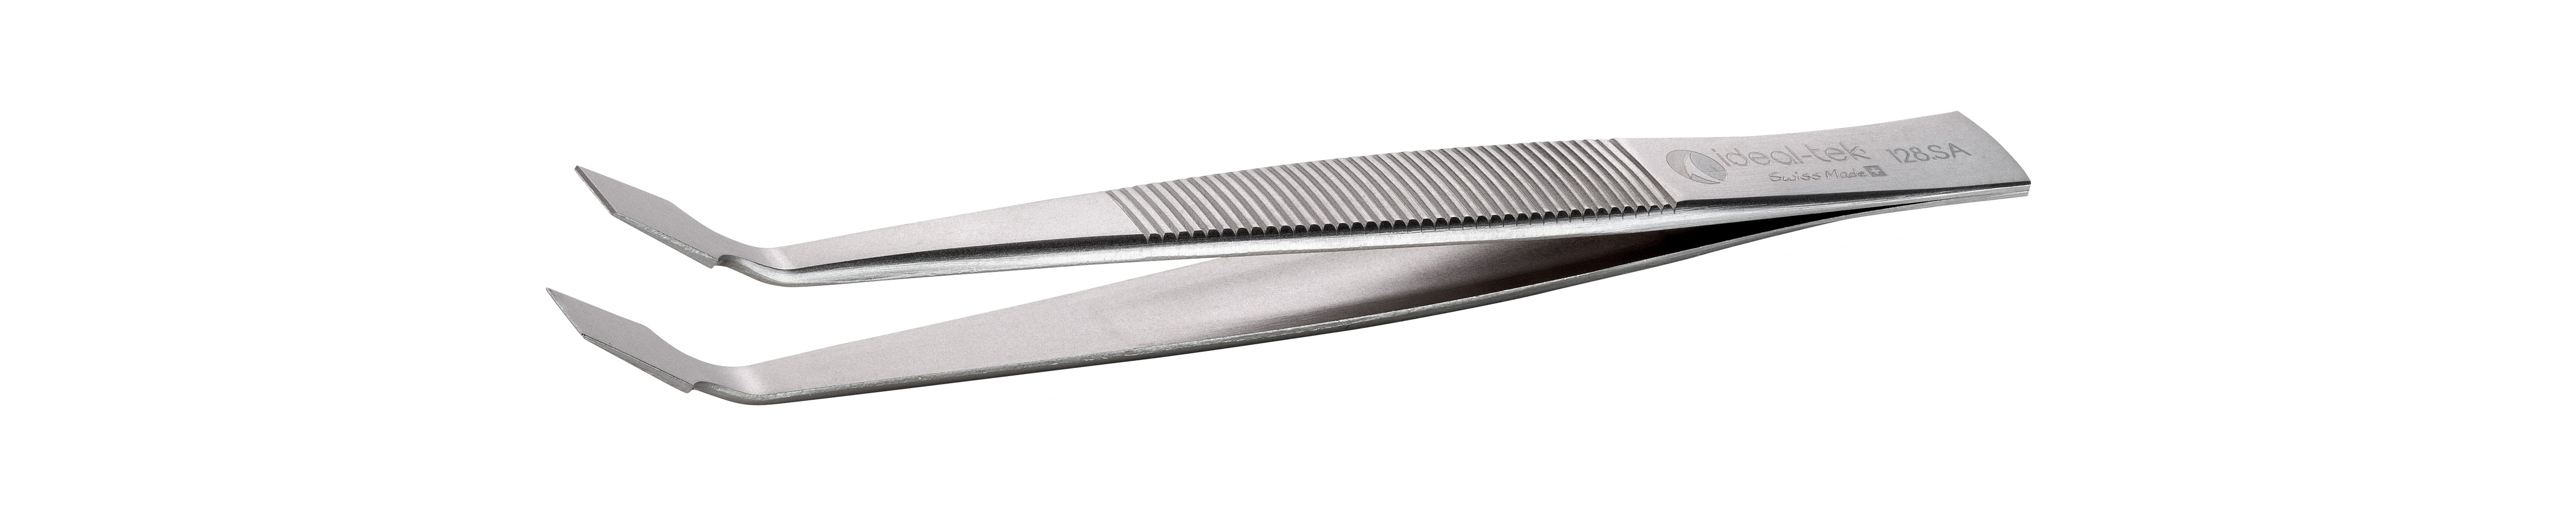 Ideal-Tek Gray Stainless Steel Fine Tip Locking Tweezers